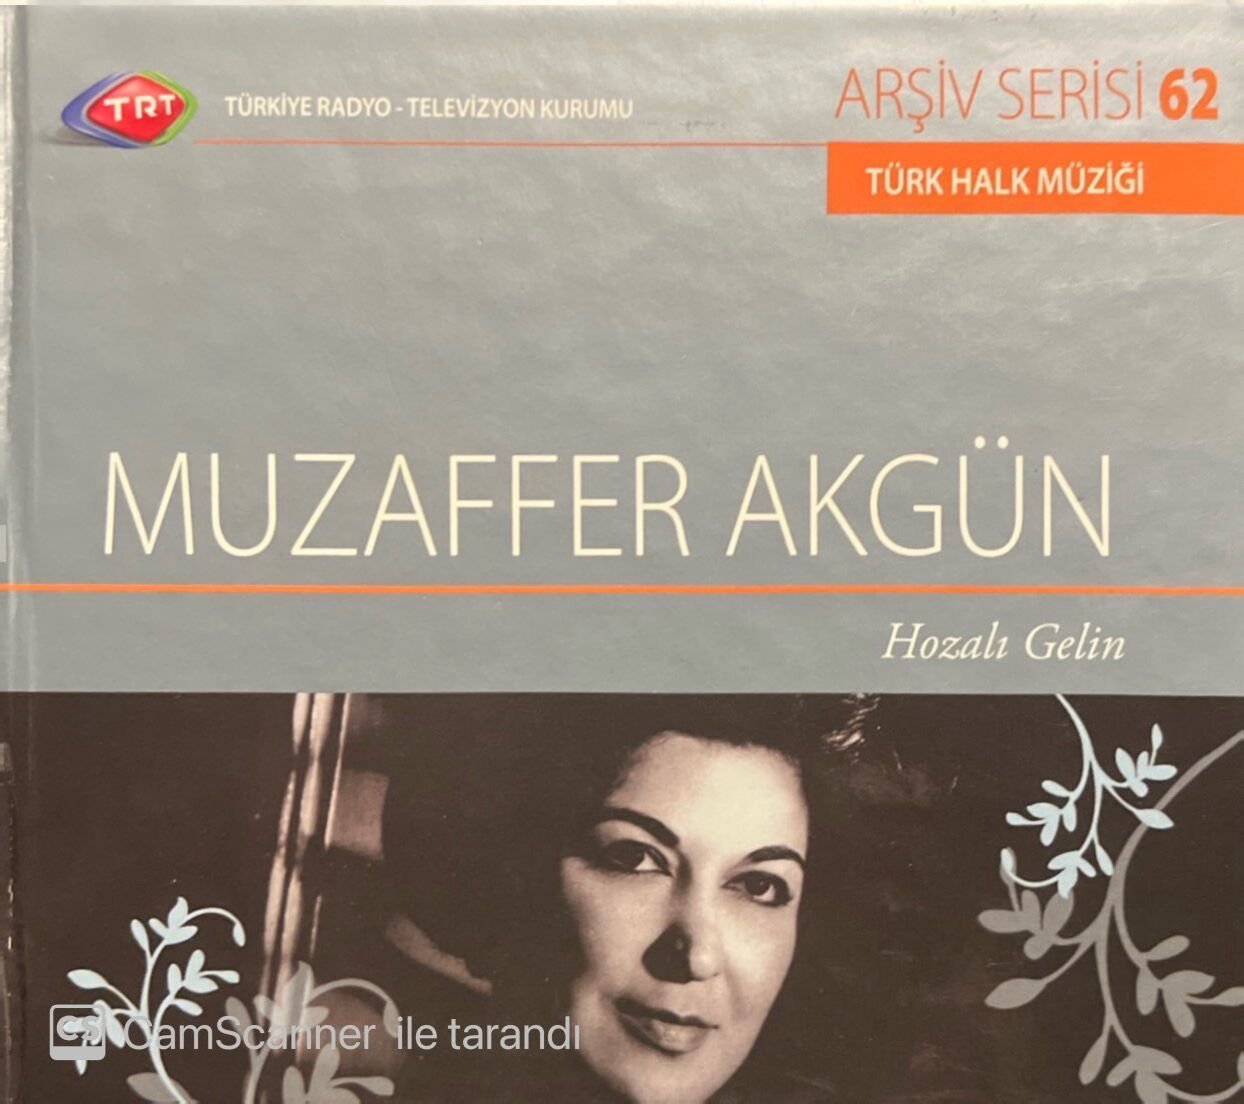 TRT Arşiv Serisi 62 Muzaffer Akgün Hozalı Gelin CD